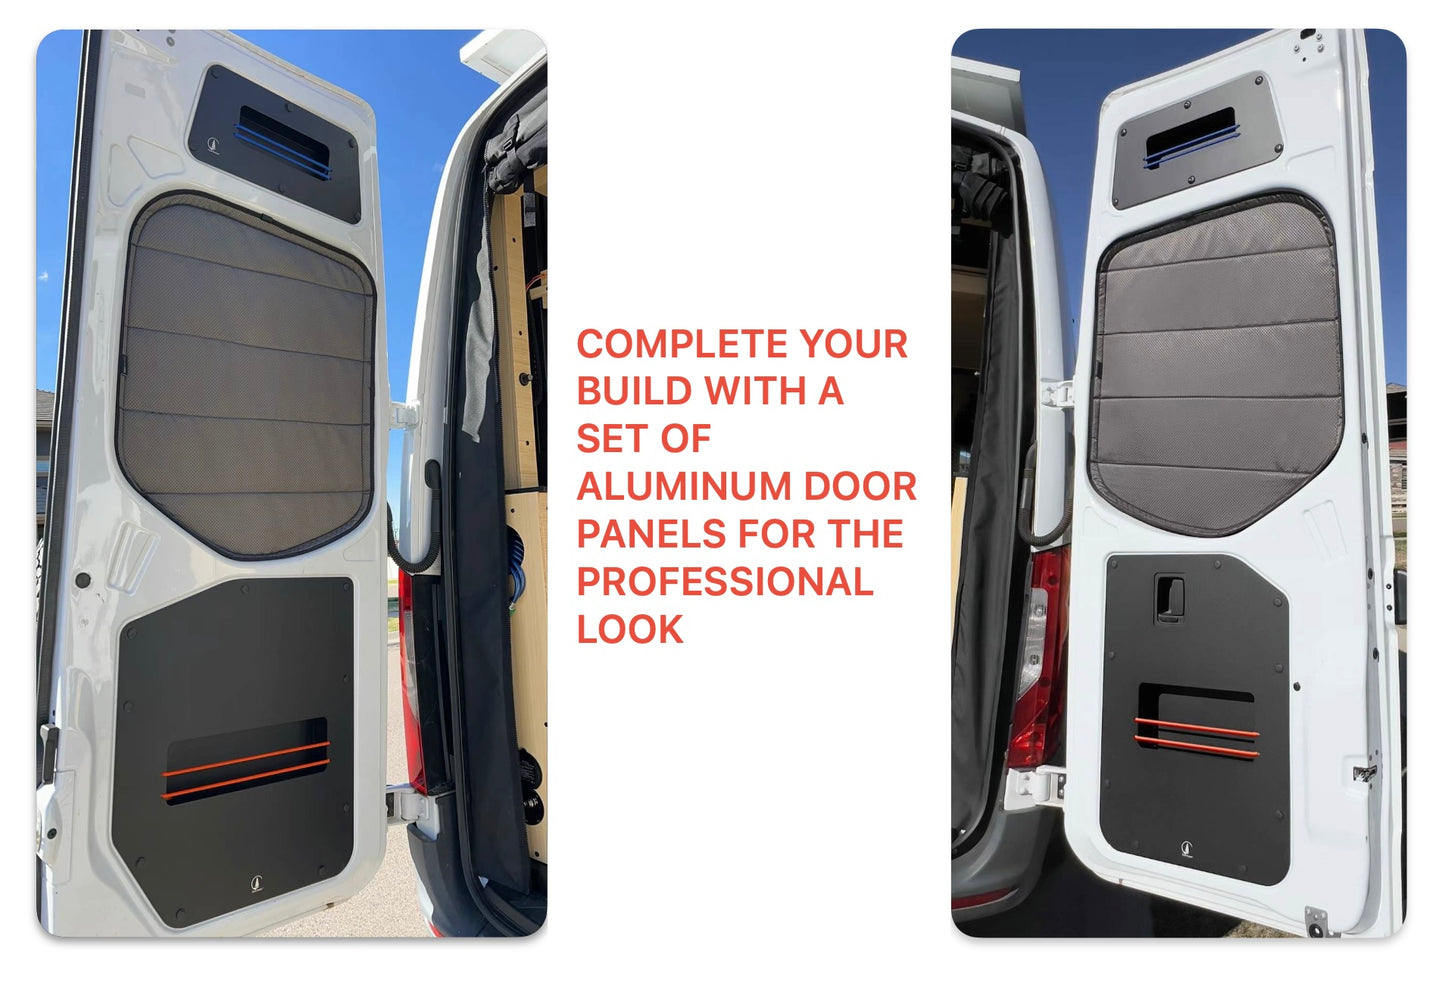 SPRINTER | ALUMINUM REAR DOOR PANELS - 4 PANELS - FULL SET FOR REAR DOORS WITH $75 OFF